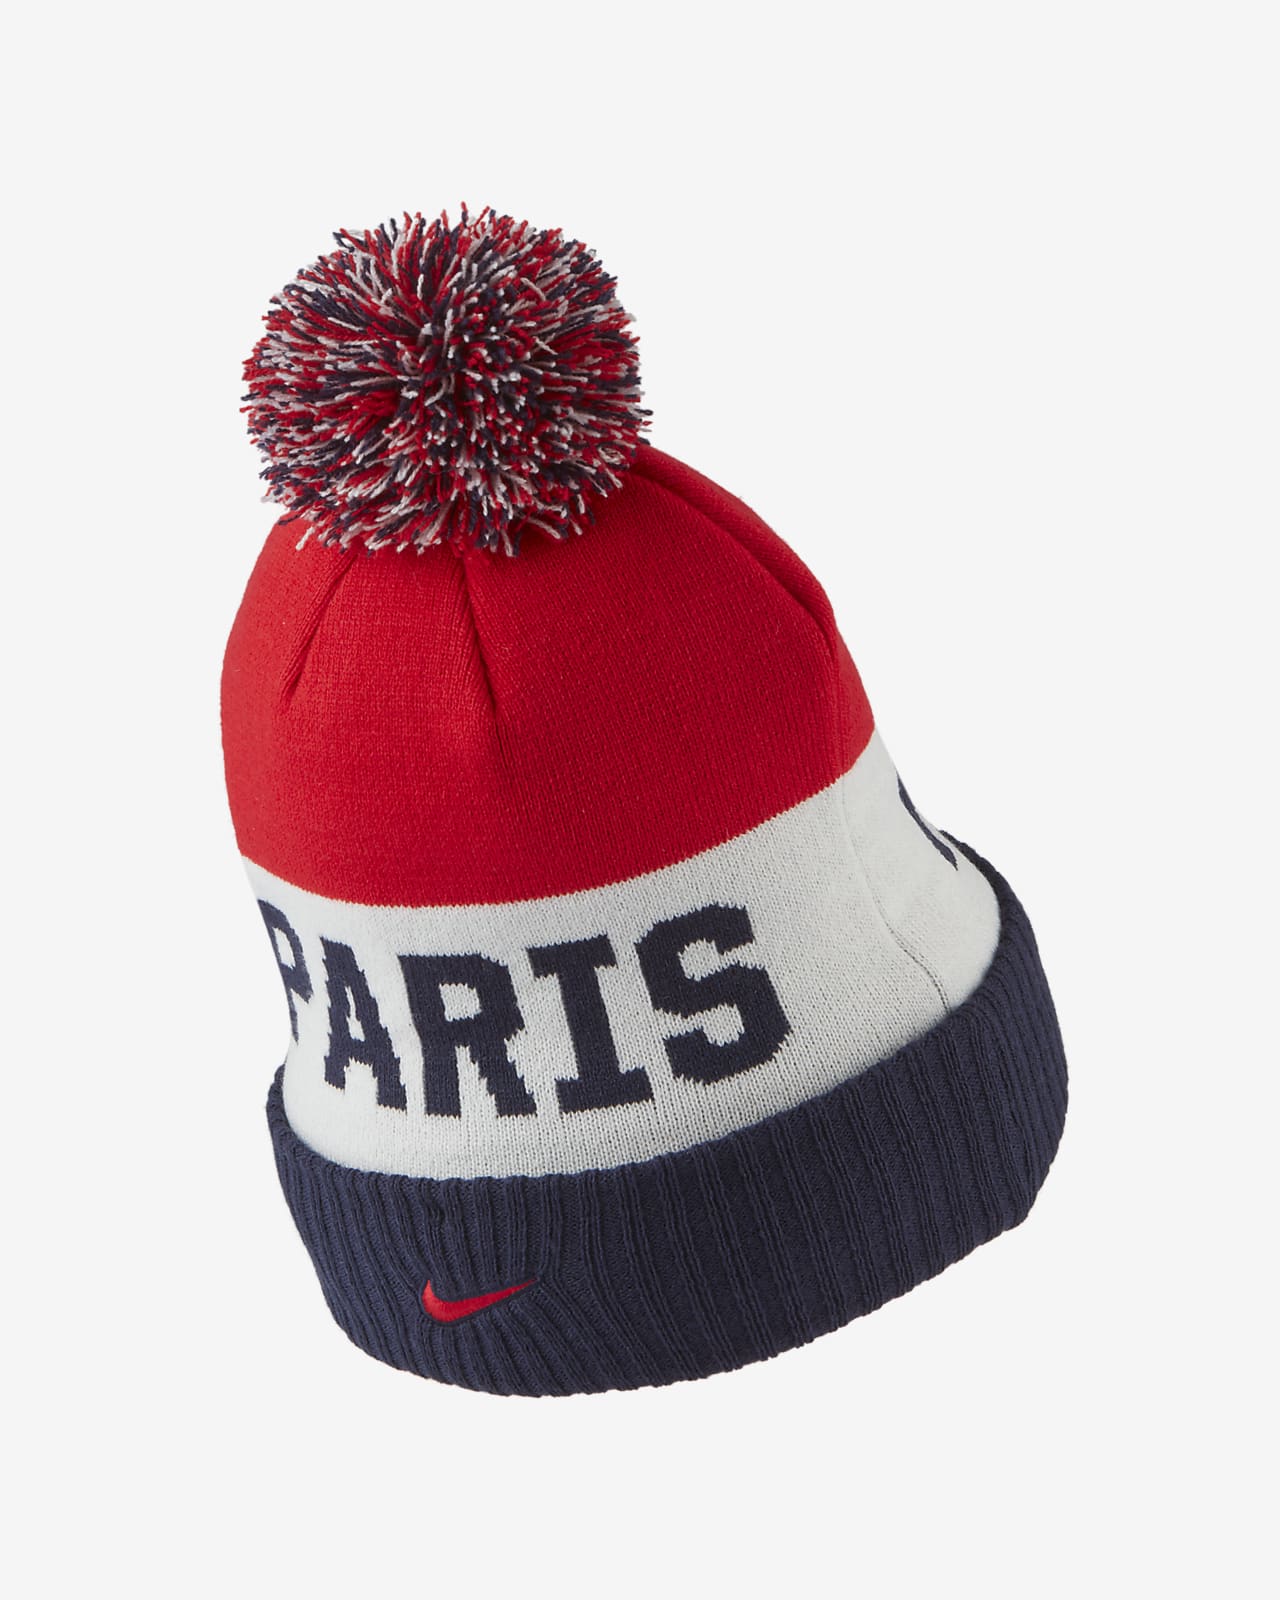 pompón París Saint-Germain. Nike.com